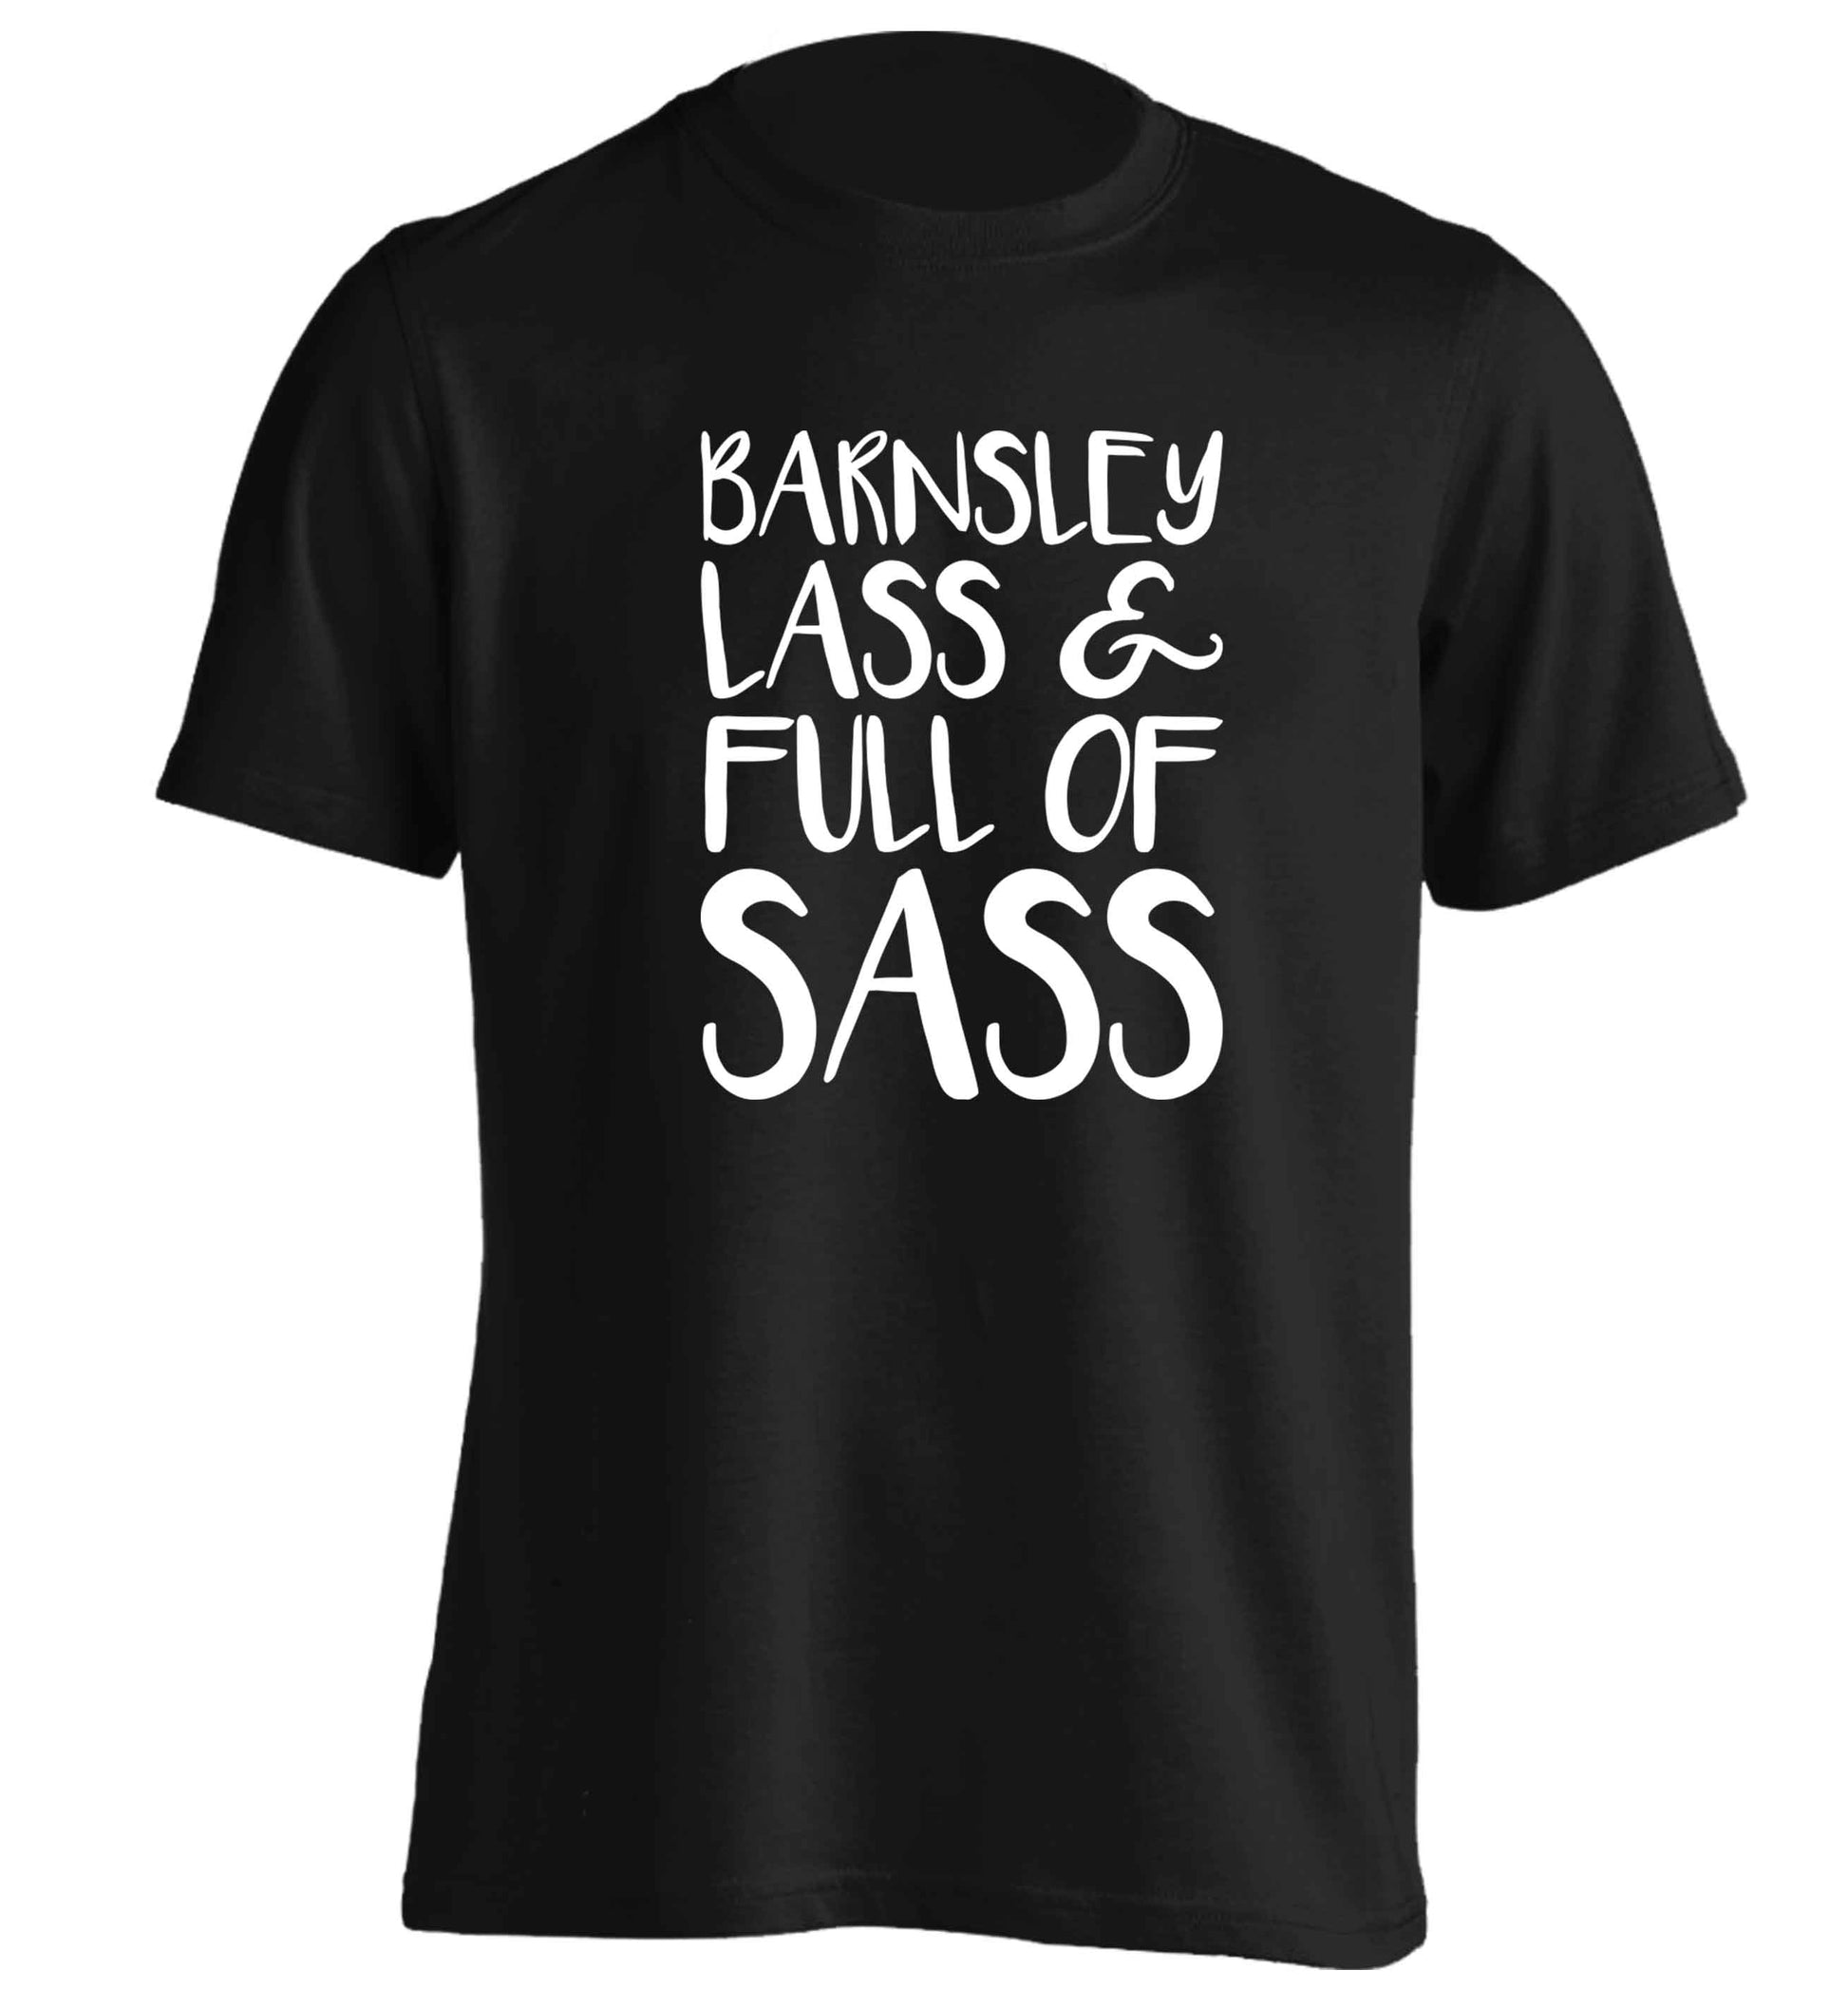 Barnsley lass and full of sass adults unisex black Tshirt 2XL